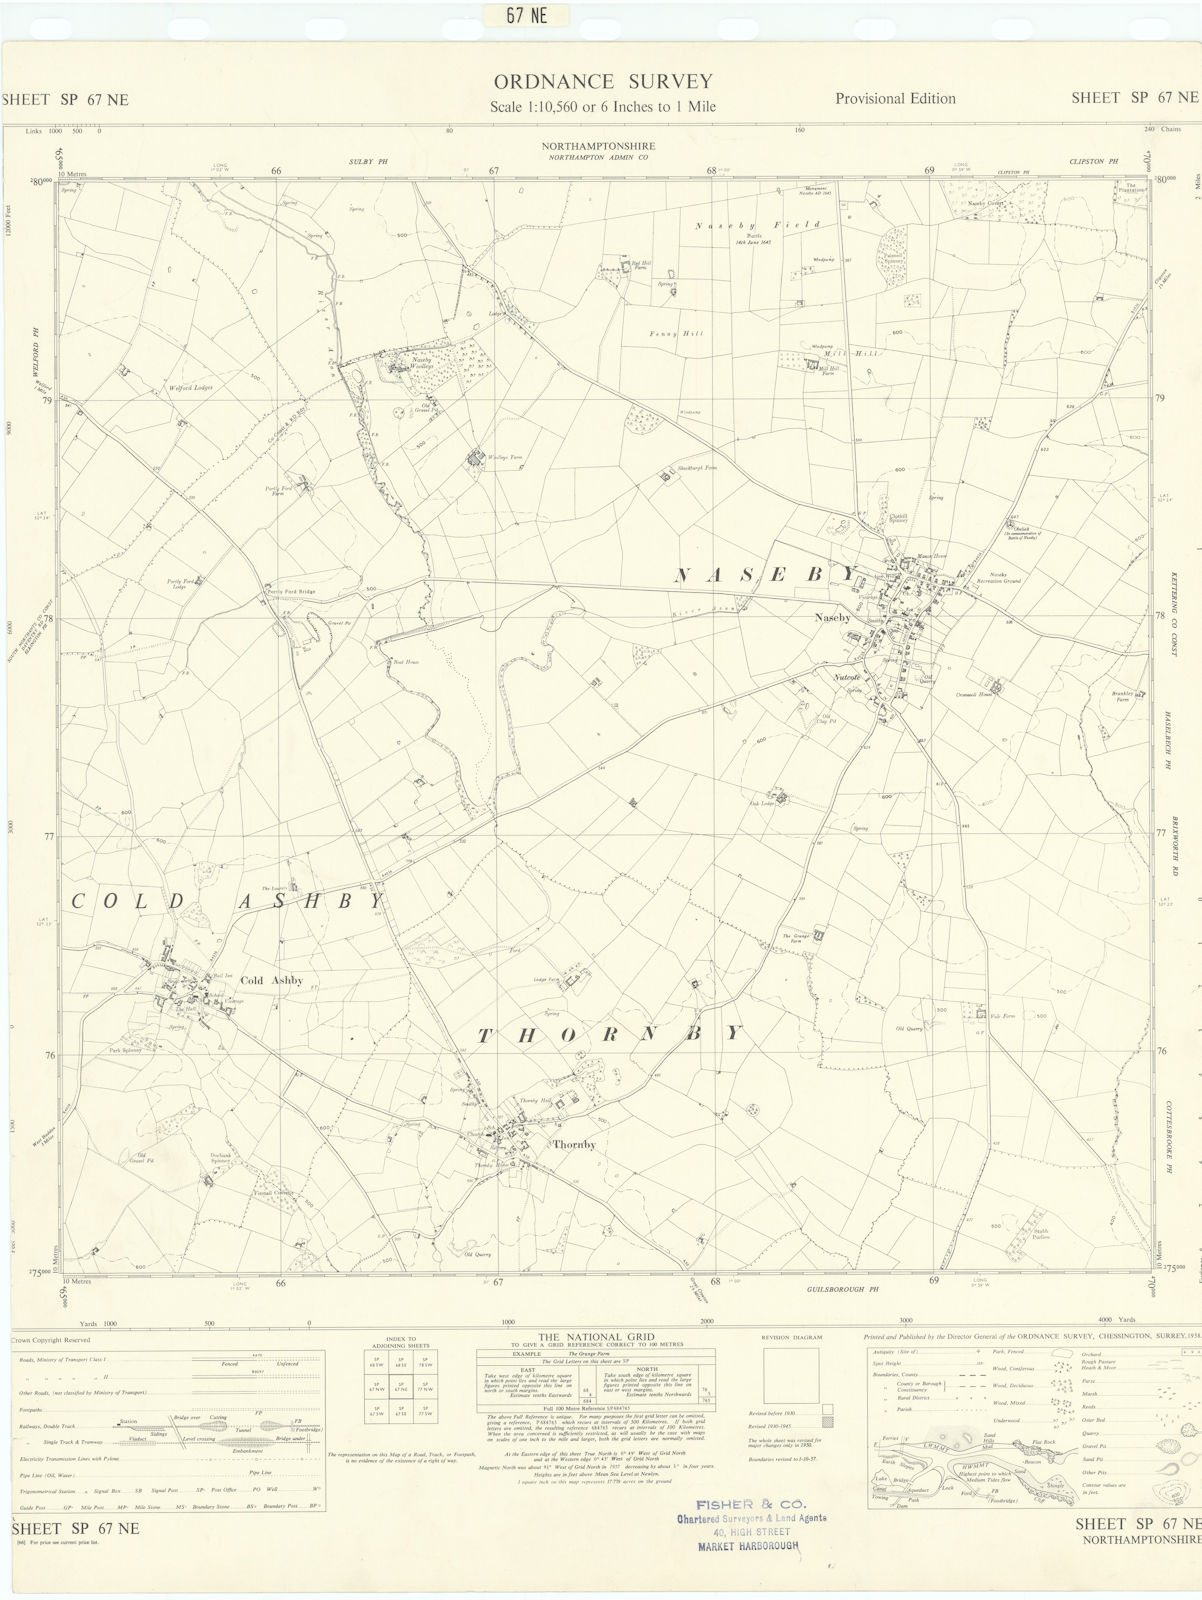 Ordnance Survey Sheet SP67NE Northamptonshire Naseby Cold Ashby Thornby 1958 map